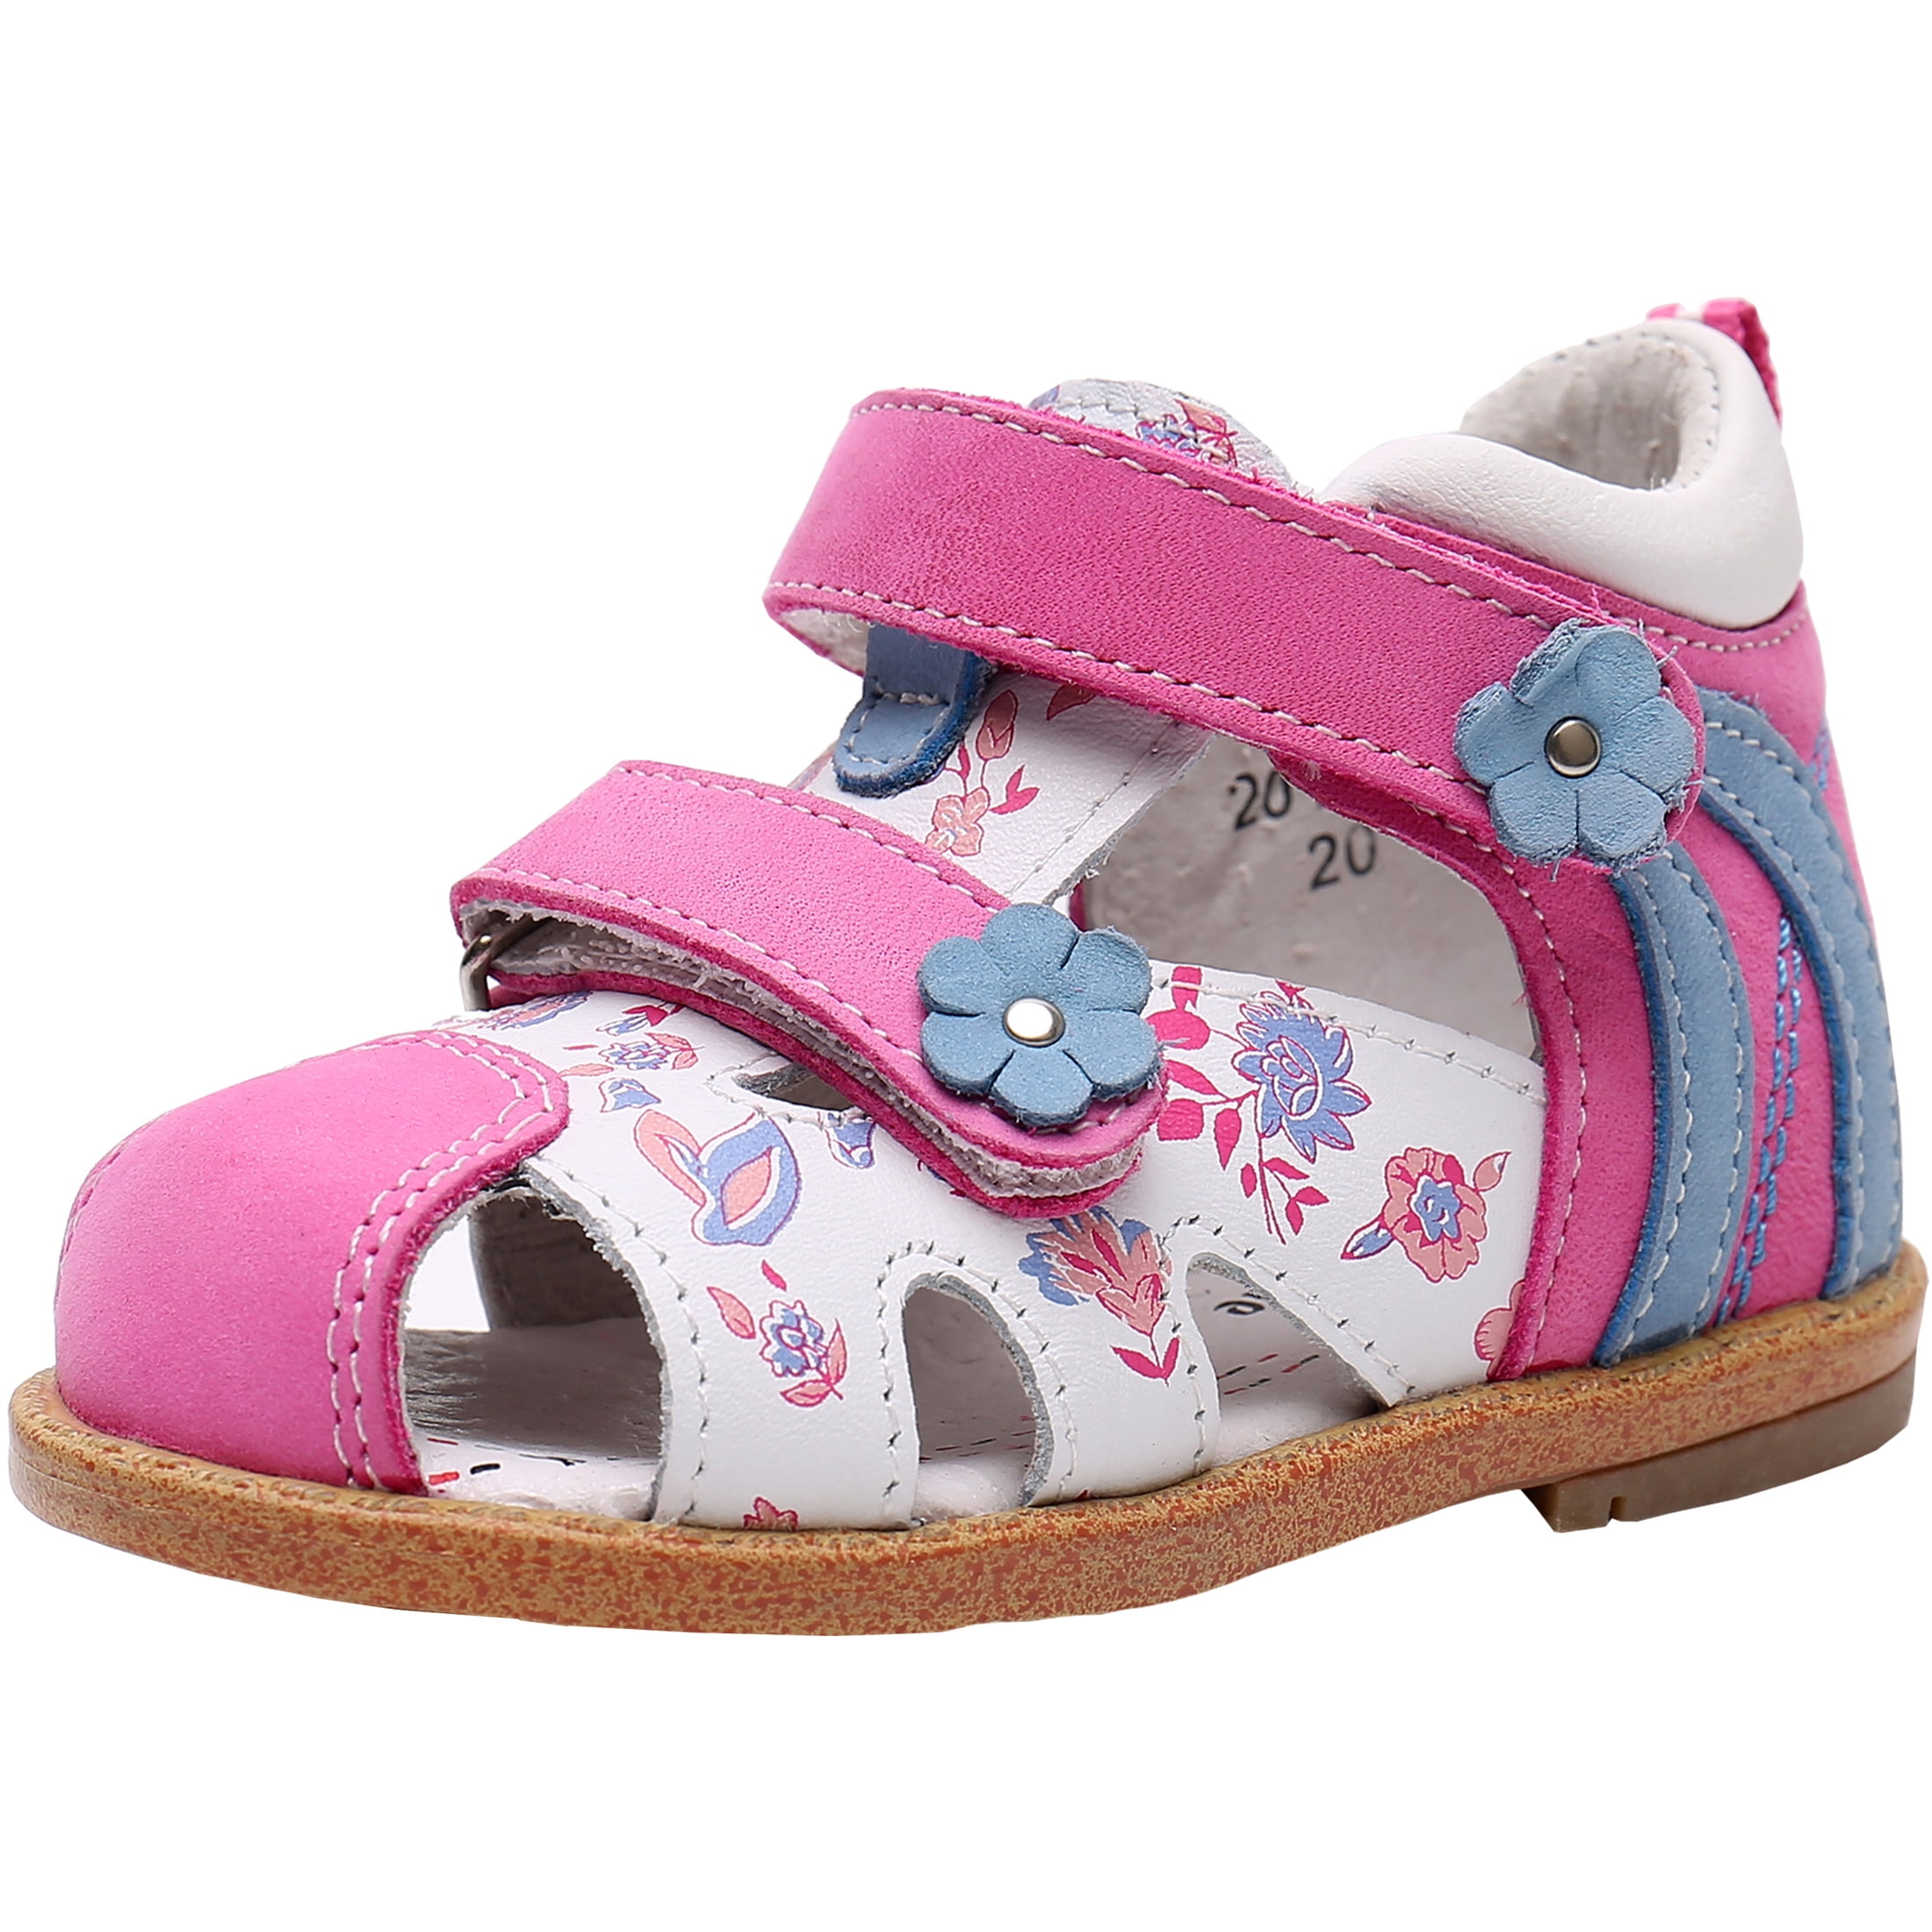 Toddler/Little Kid Open Toe Beach Sandal Shoes Ahannie Boys Girls Outdoor Summer Sandals 